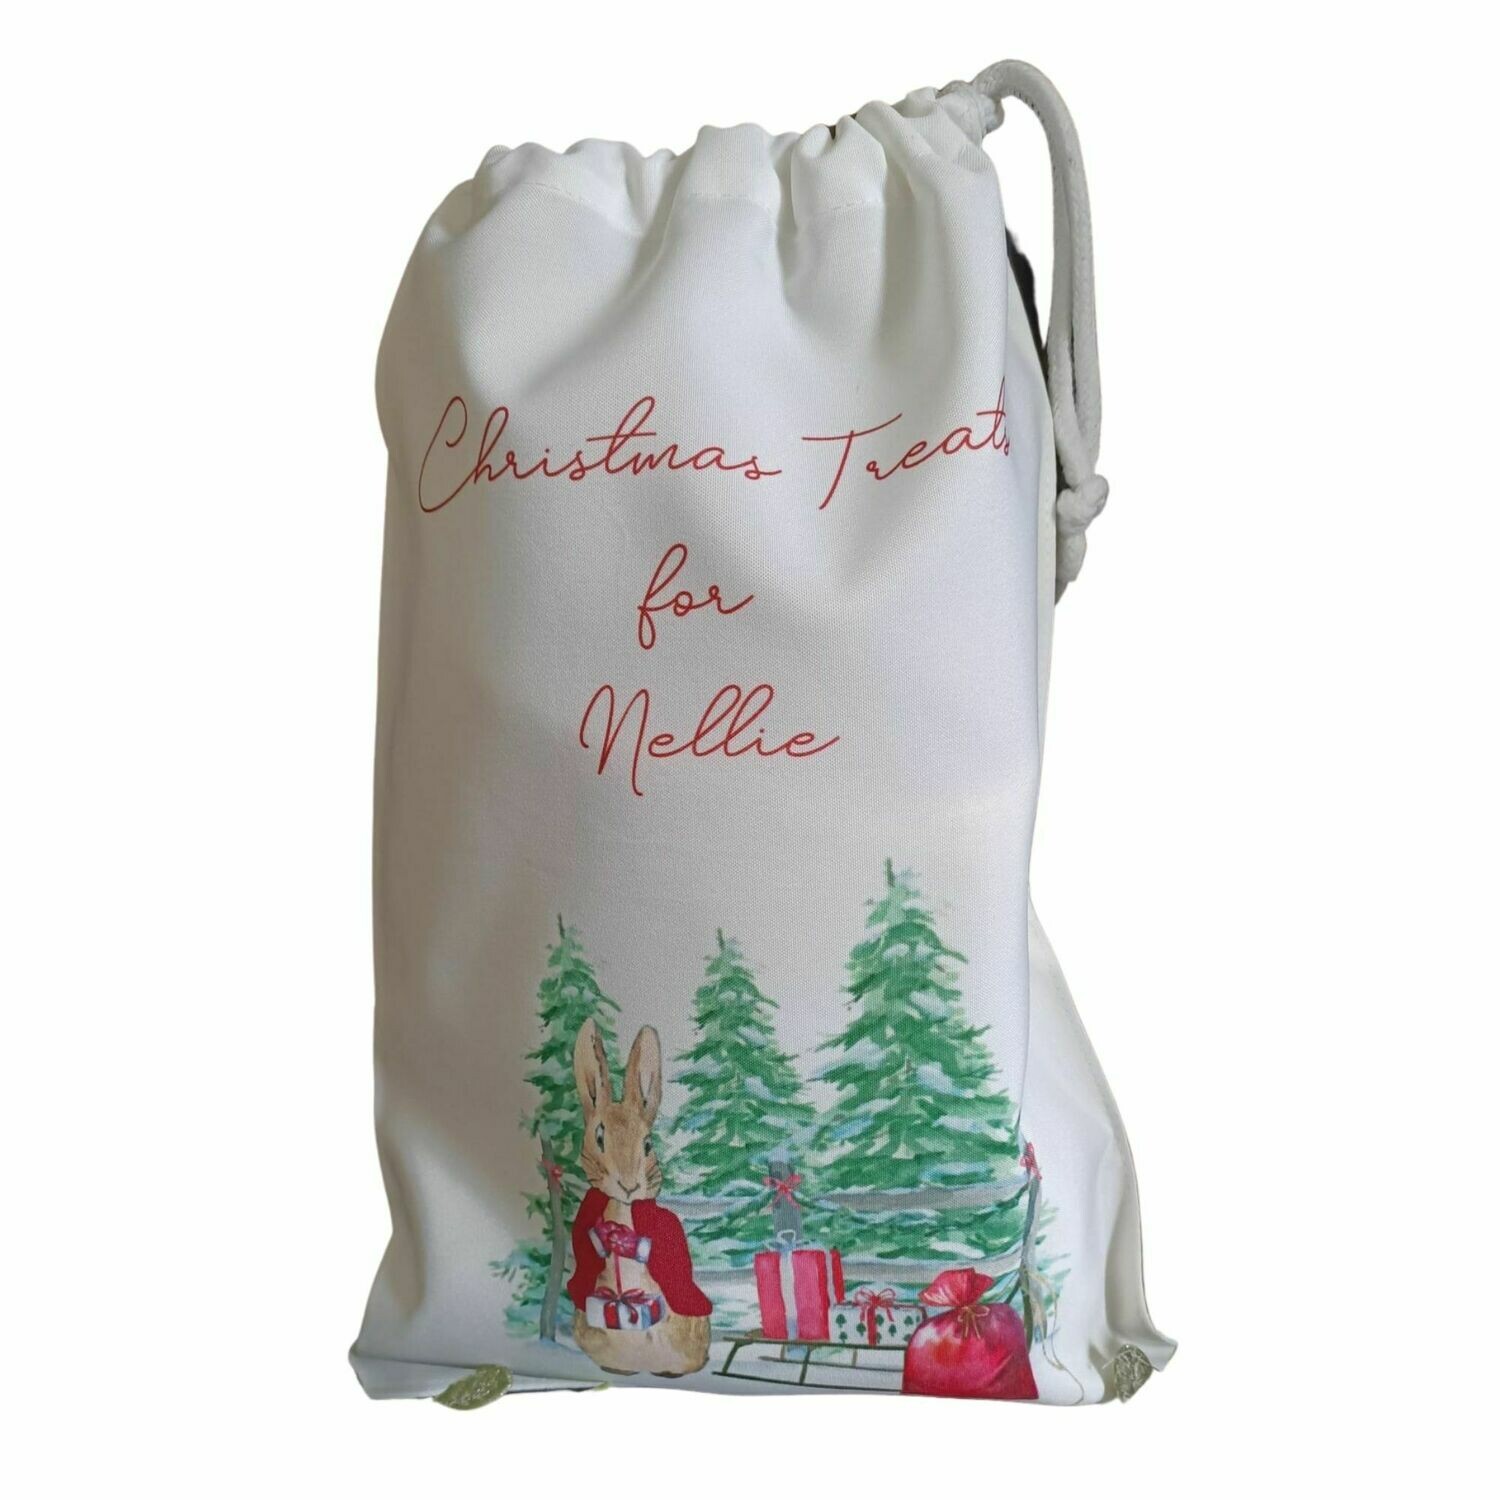 Personalised Christmas Eve Bag